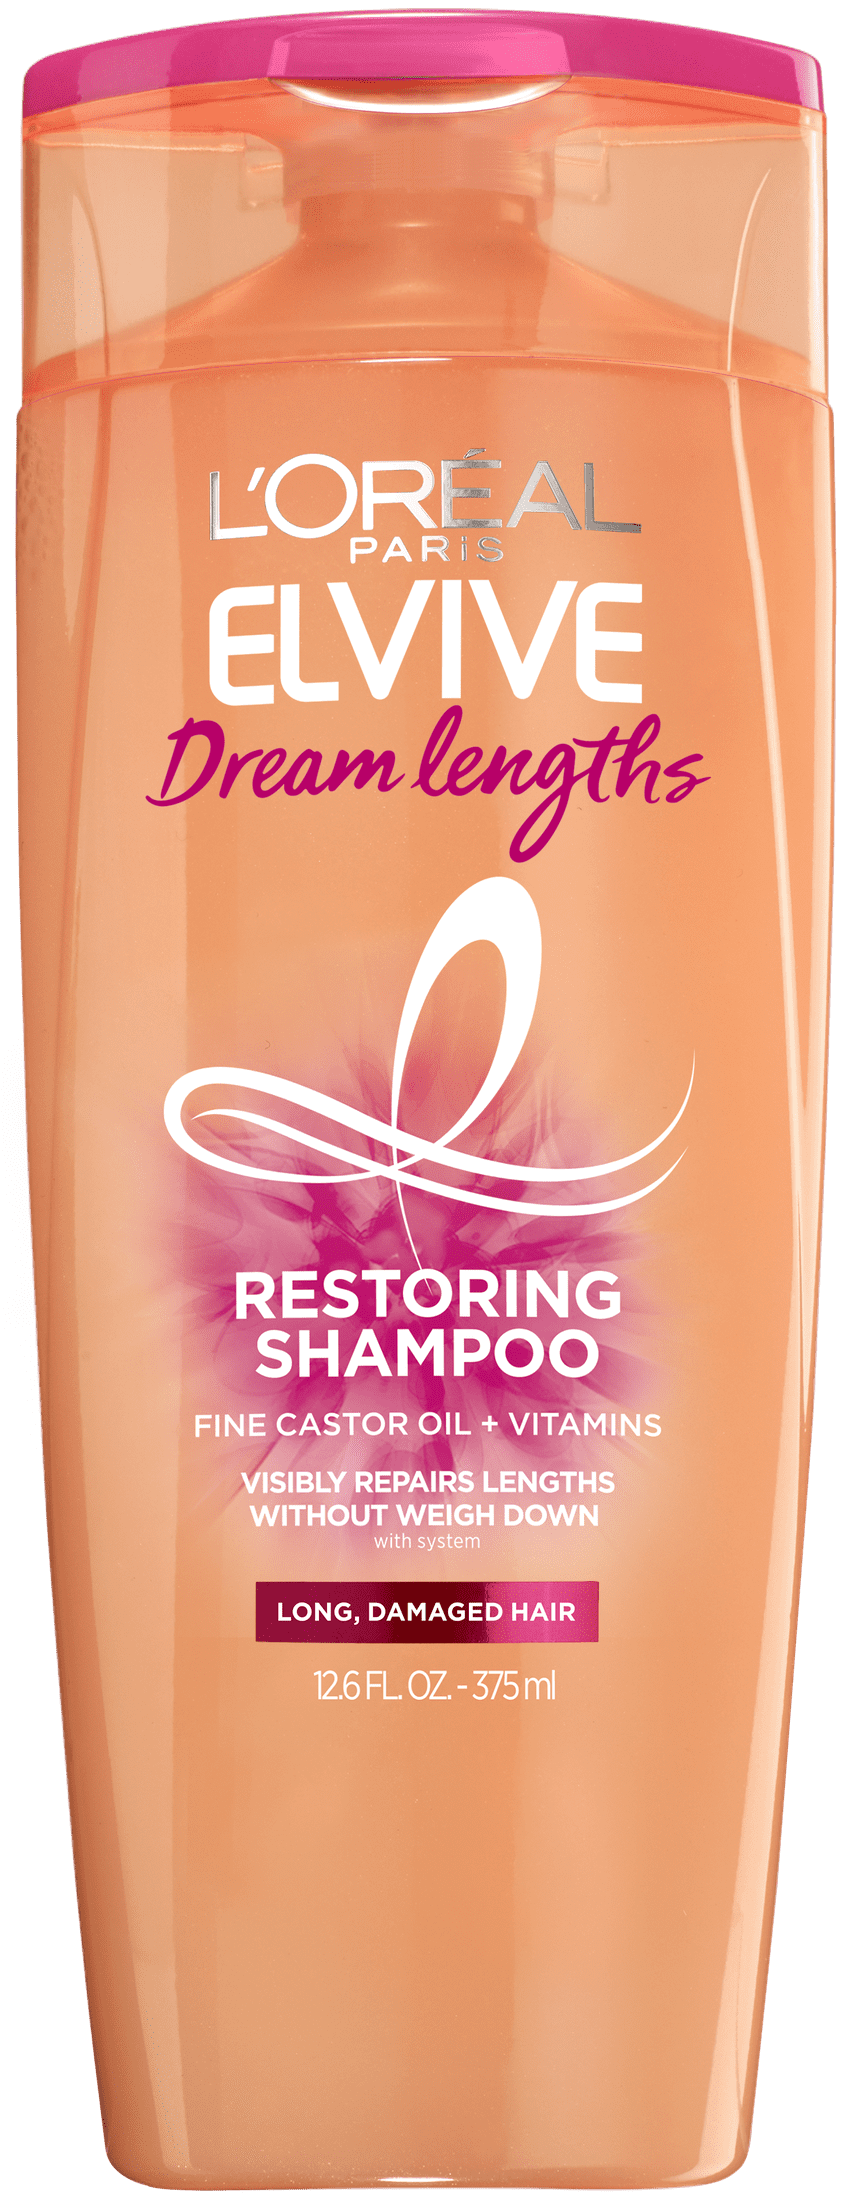 L'Oreal Paris Elvive Dream Lengths Restoring Shampoo, 13.5 fl oz 